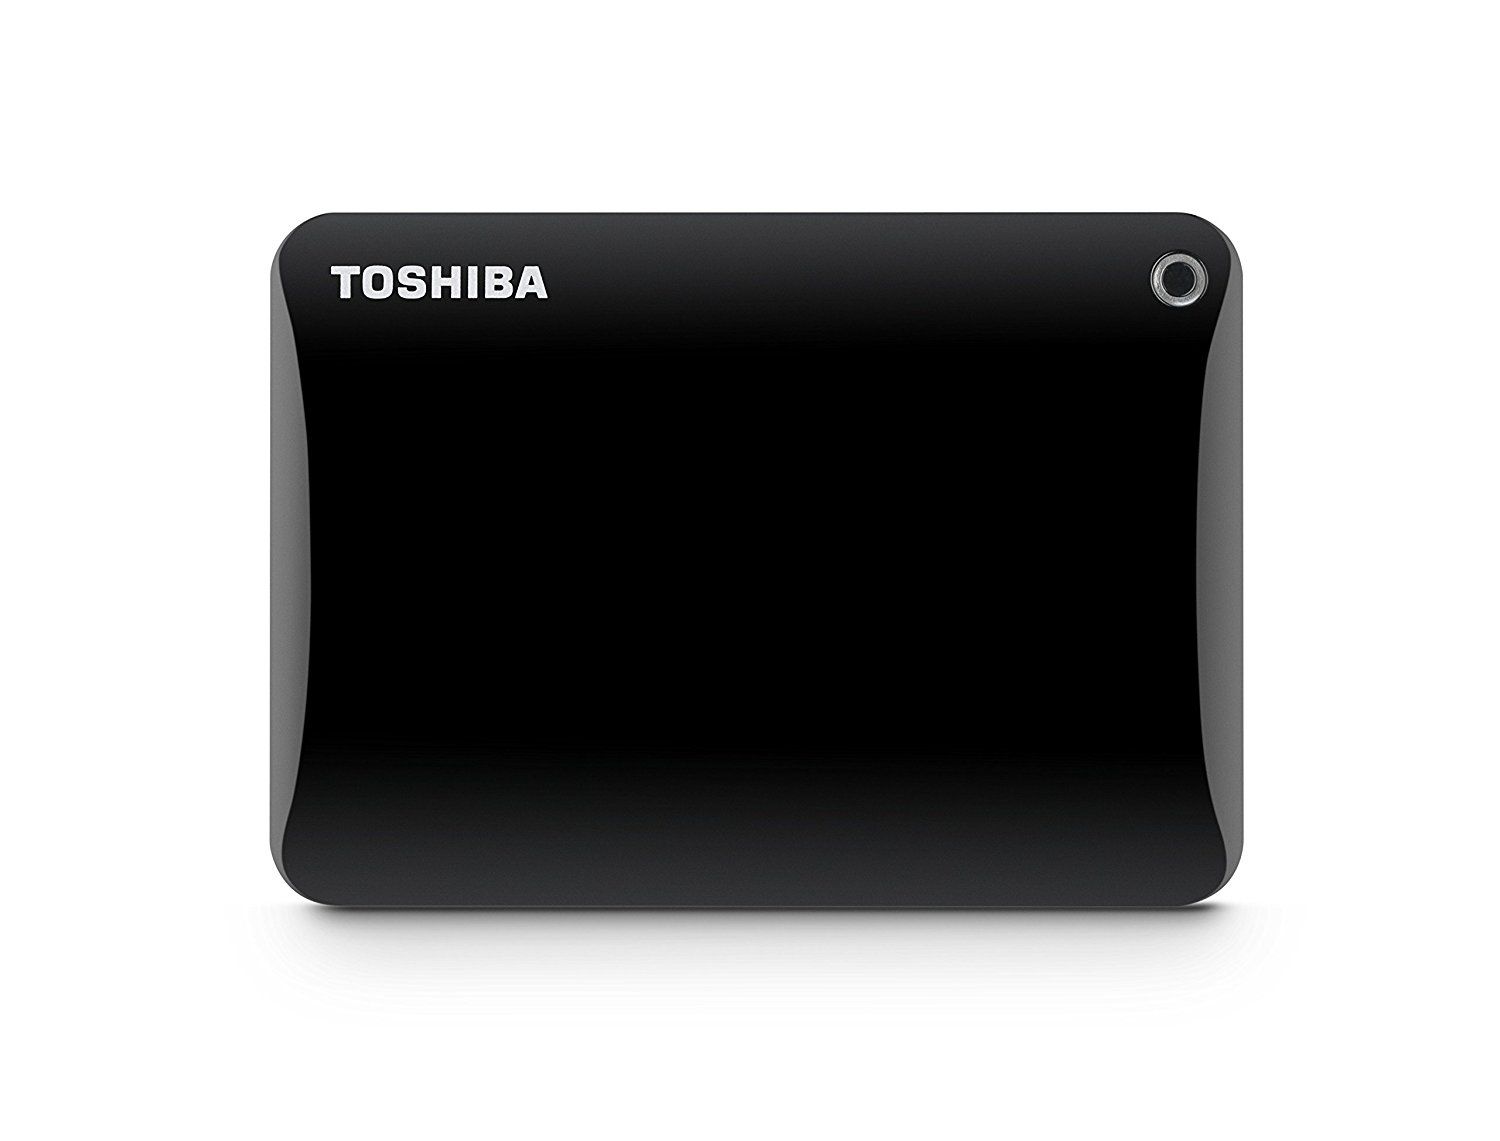     			Toshiba Canvio Connect II 2 TB USB 3.0 External Hard Drive (Black)